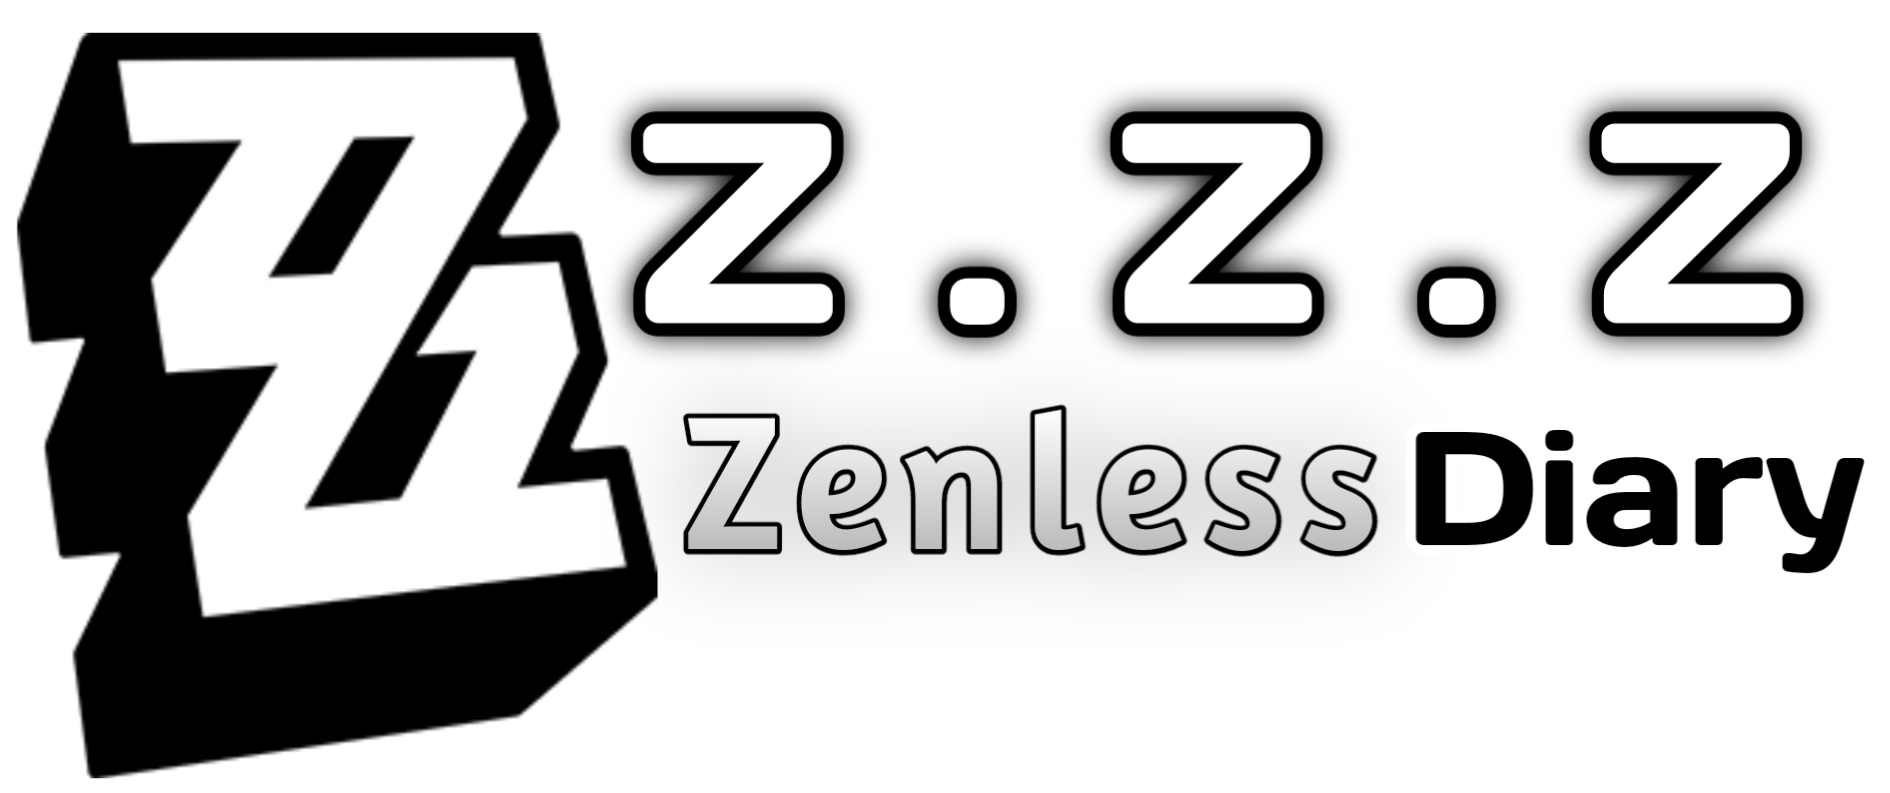 Zenless Zone Zero Characters List (ZZZ)